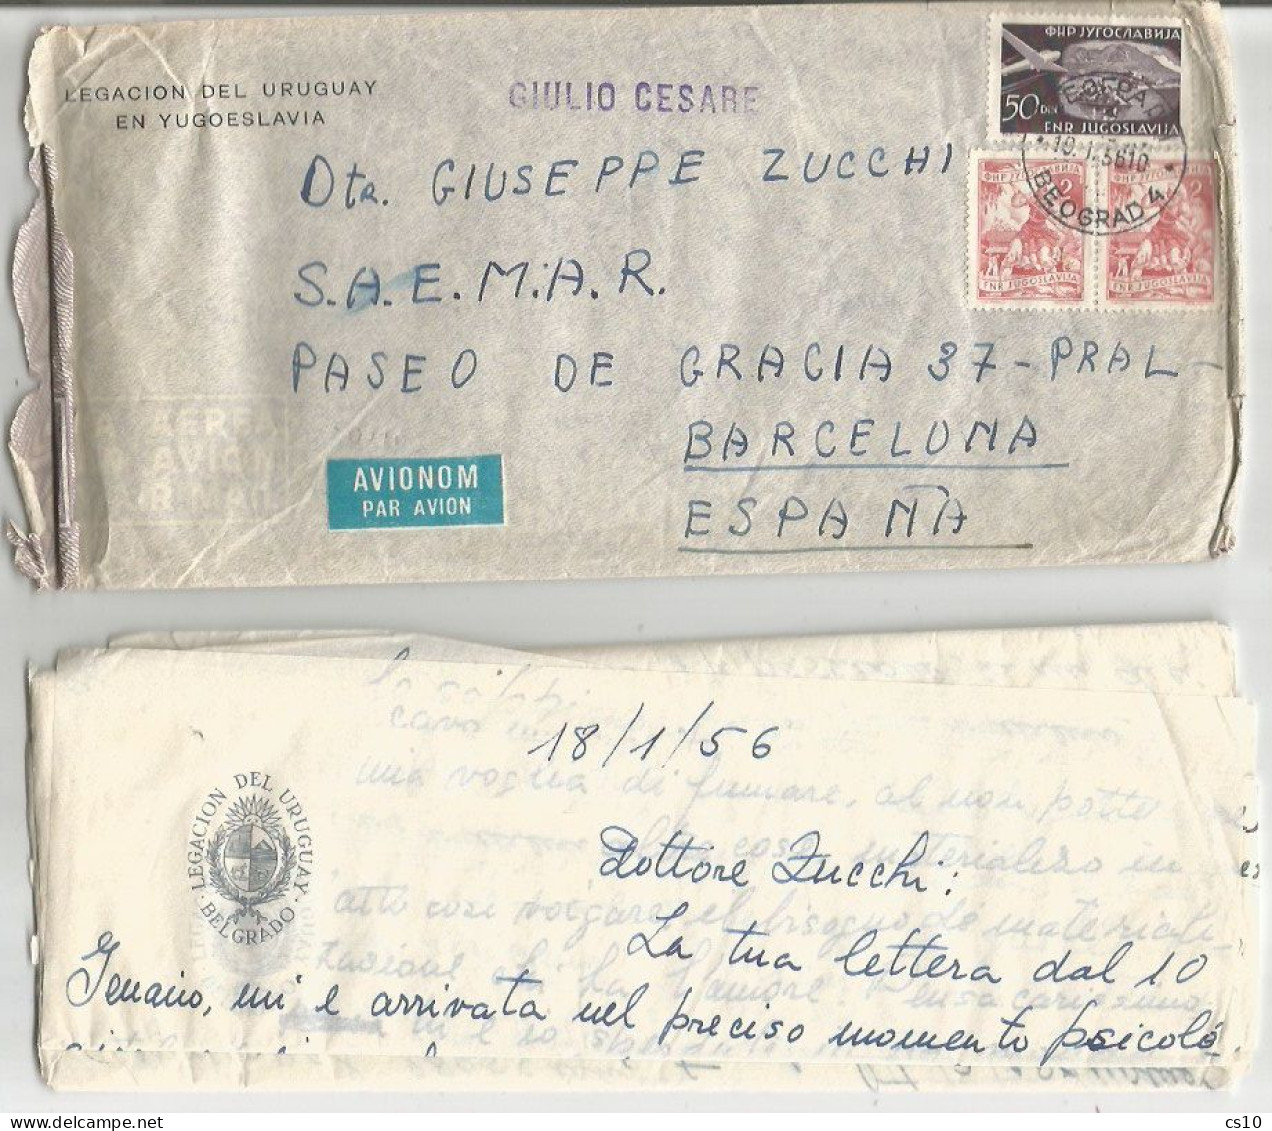 Jugoslavija Legation Uruguay AirmailCV Beograd 19jan1956 X Spain To S/S "Giulio Cesare" With Content (6pages) - Posta Aerea